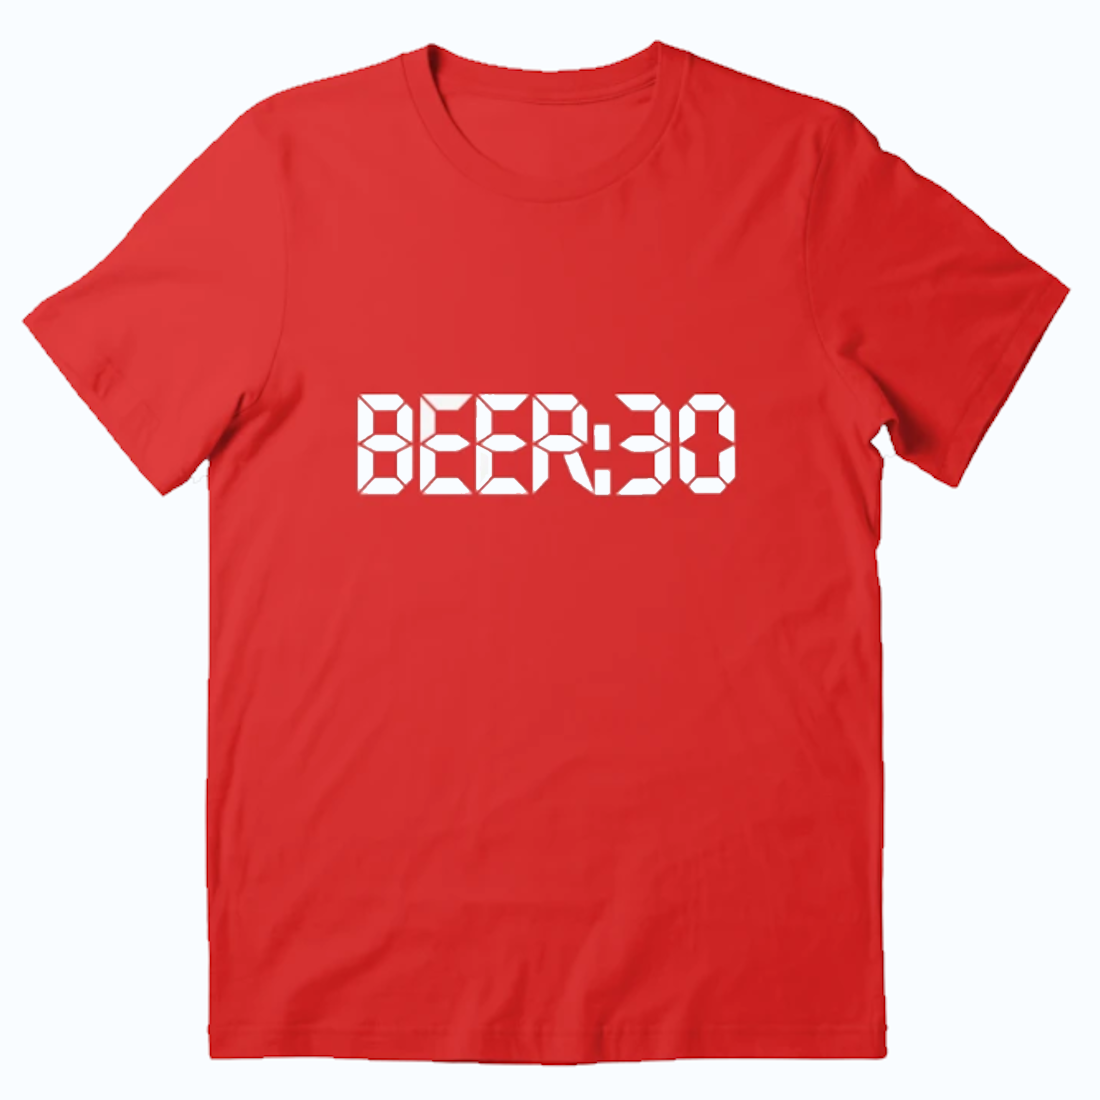 Beer 30 Meme for beer drinkers t-shirt - Premium t-shirt from Lees Krazy Teez - Just $19.95! Shop now at Lees Krazy Teez